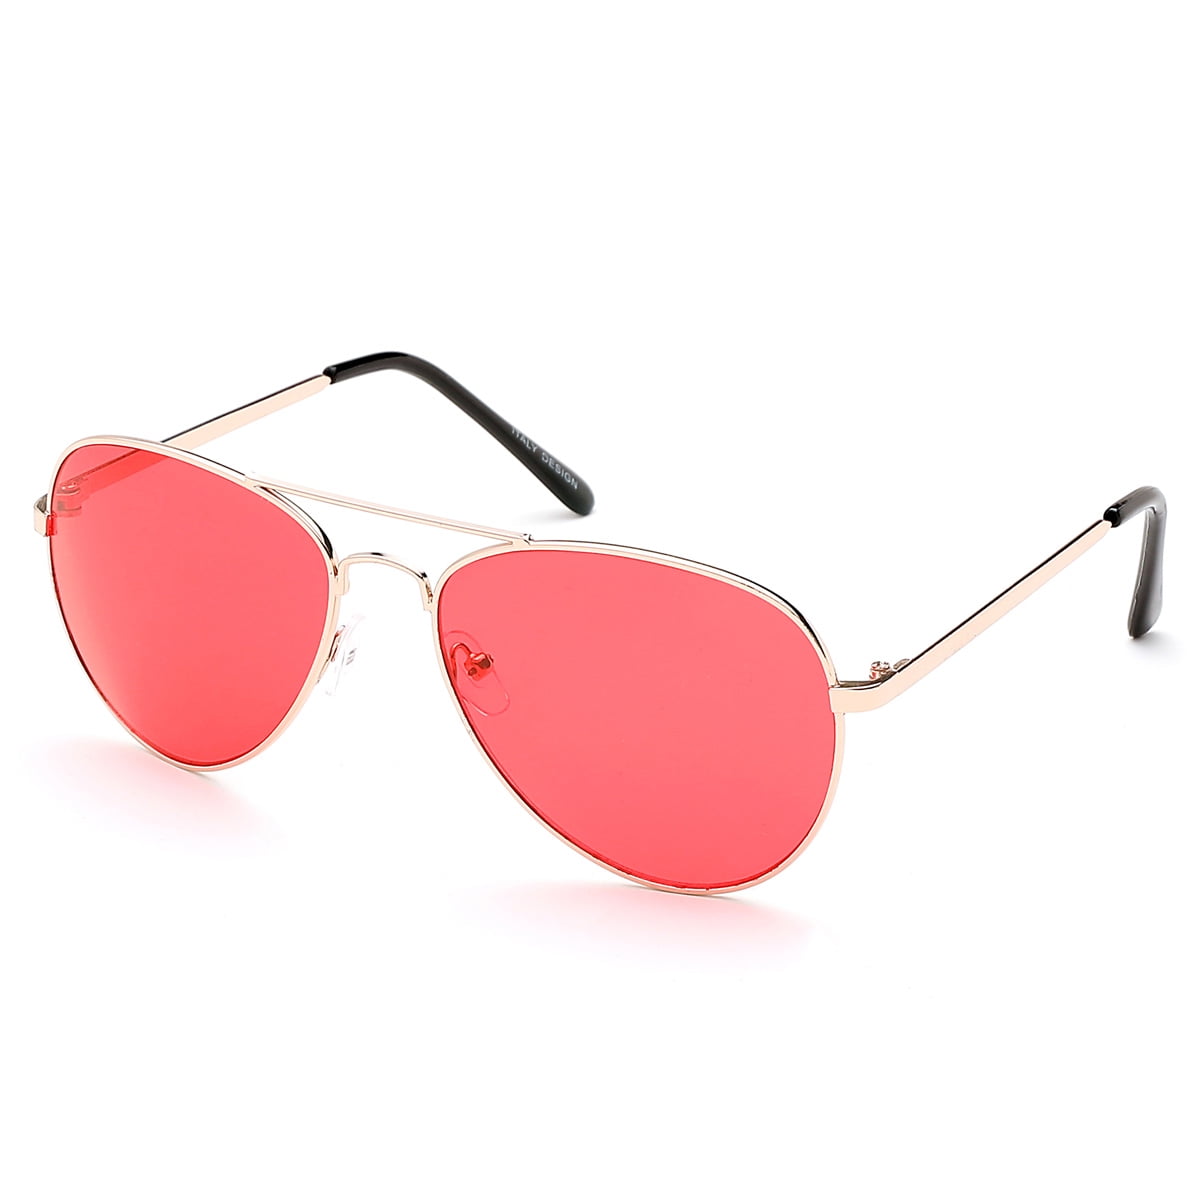 Aviator Sunglasses for Men Mirrored Sports Women Driving Vintage